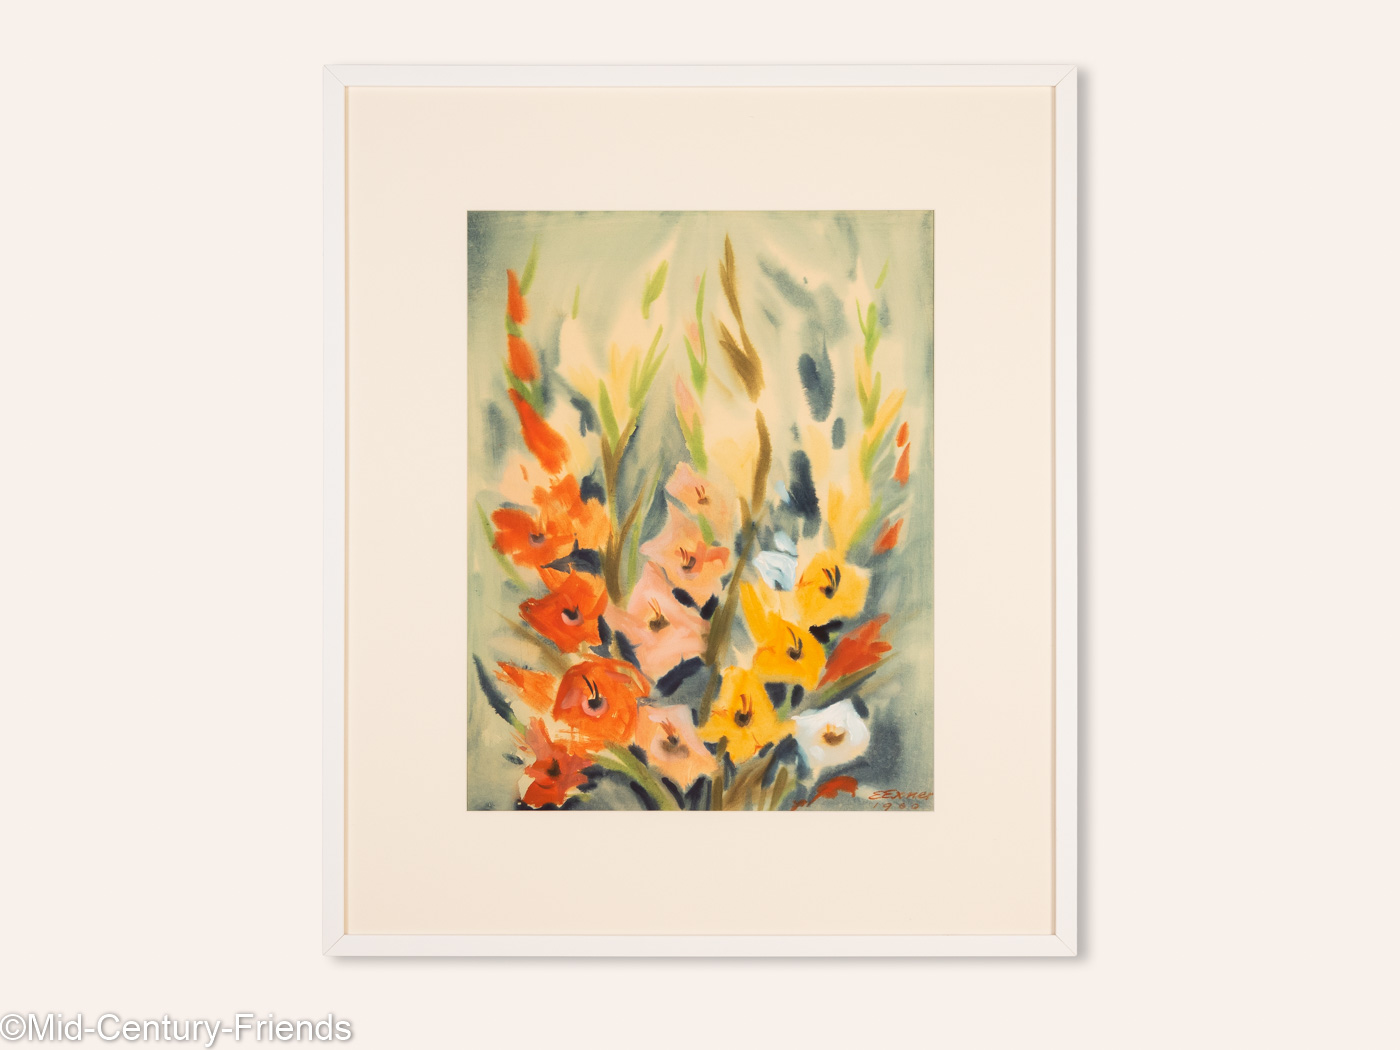 Gladiolen, Aquarell auf Papier, 74 x 88 cm